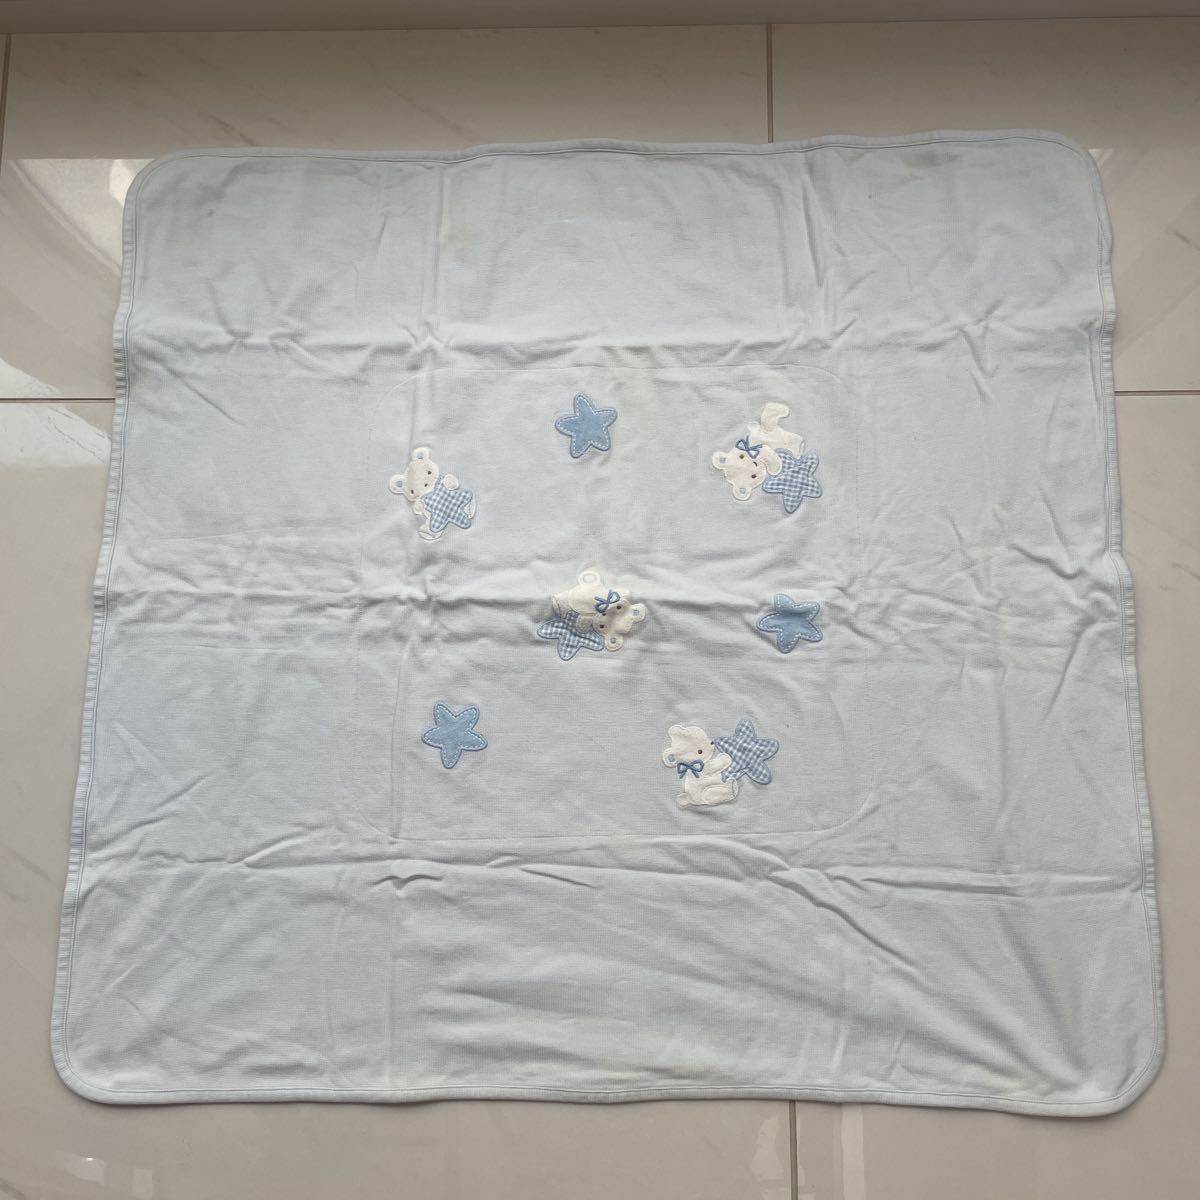 familiar blanket blanket lap blanket birth preparation cotton 100 light blue regular price 10000 jpy rank popular complete sale goods 